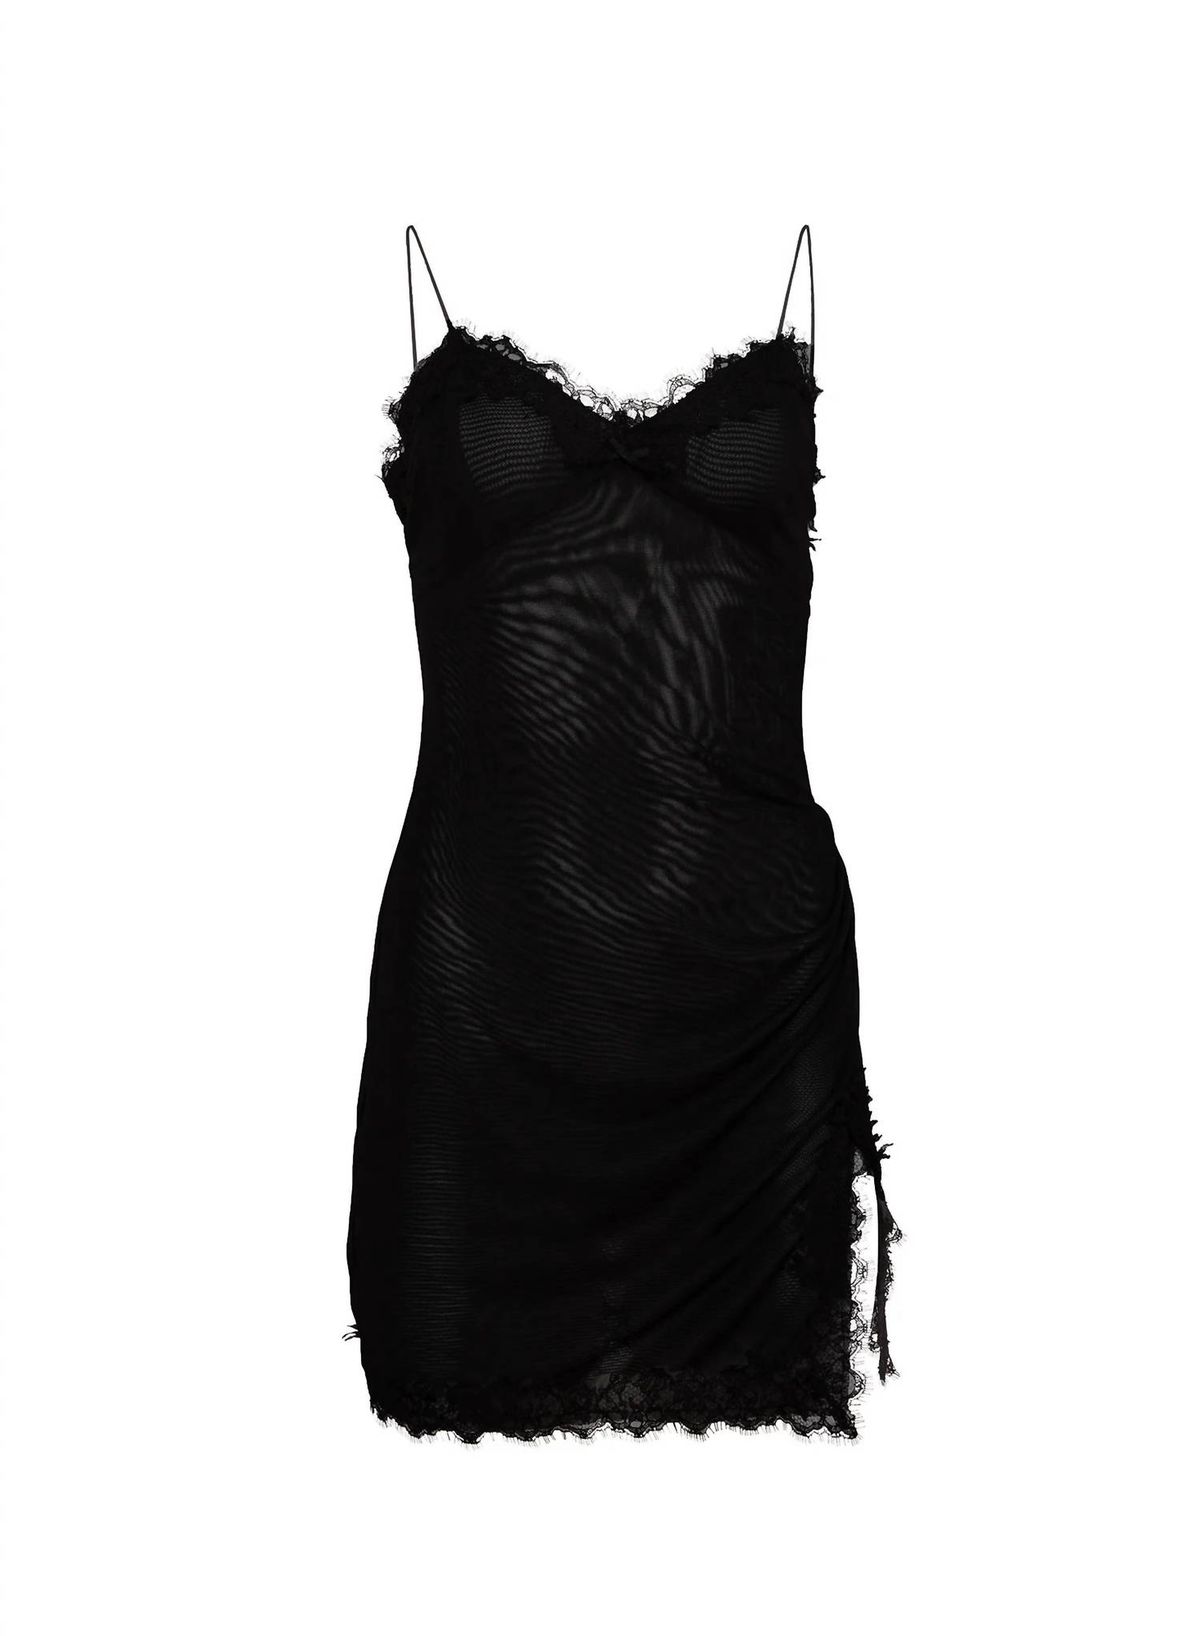 Style 1-762871304-2901 Fleur Du Mal Size M Lace Black Cocktail Dress on Queenly